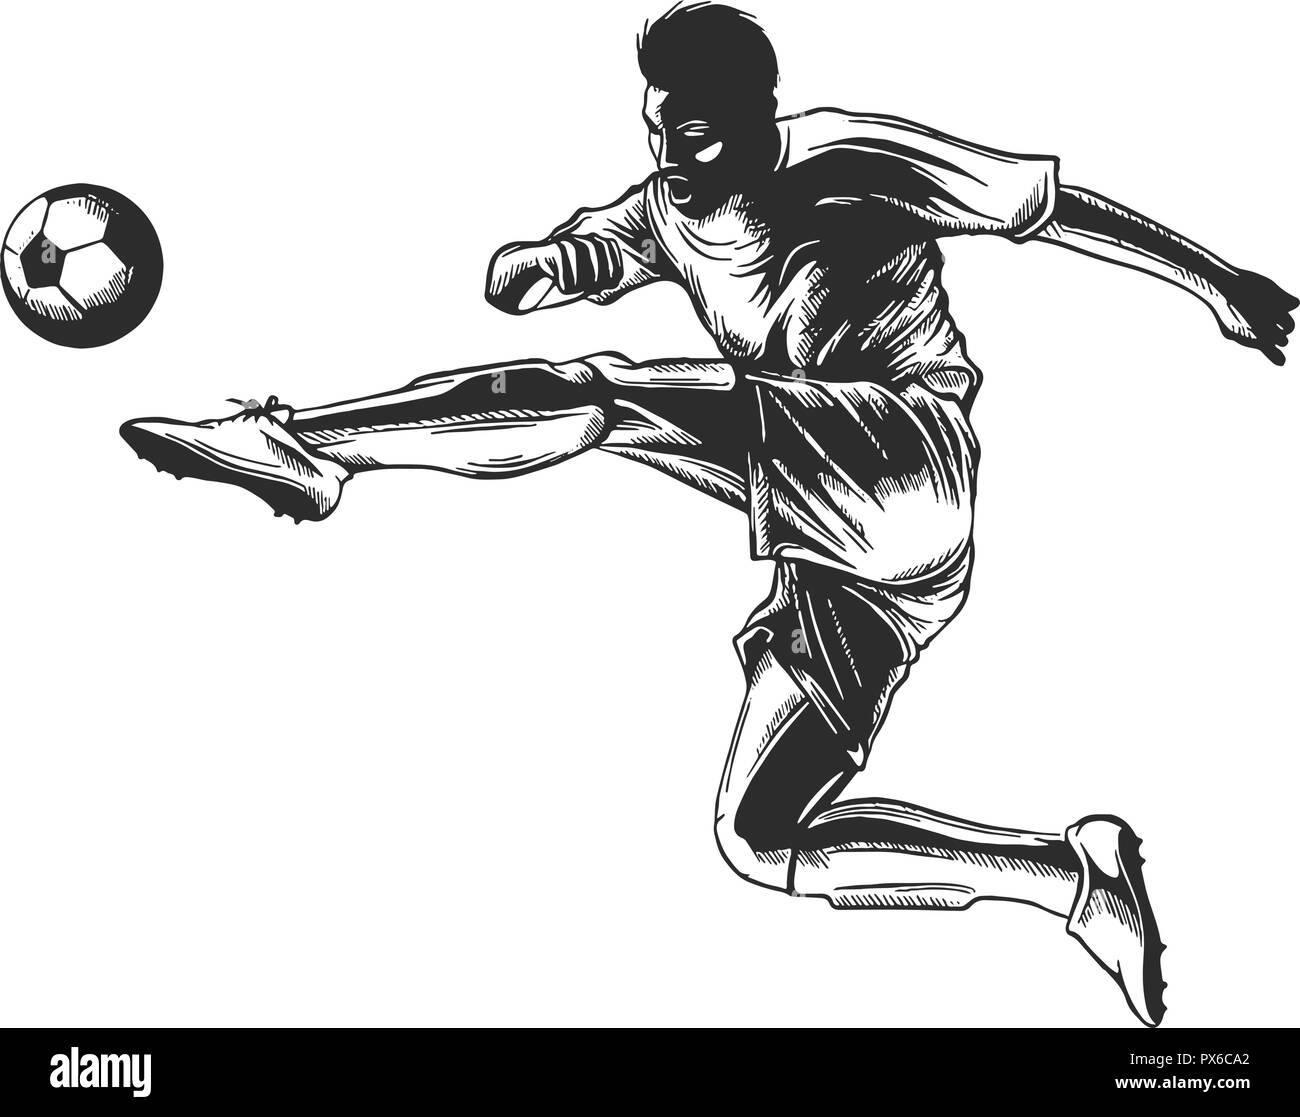 Soccer player kicking ball. illustration of sport Stock Vector